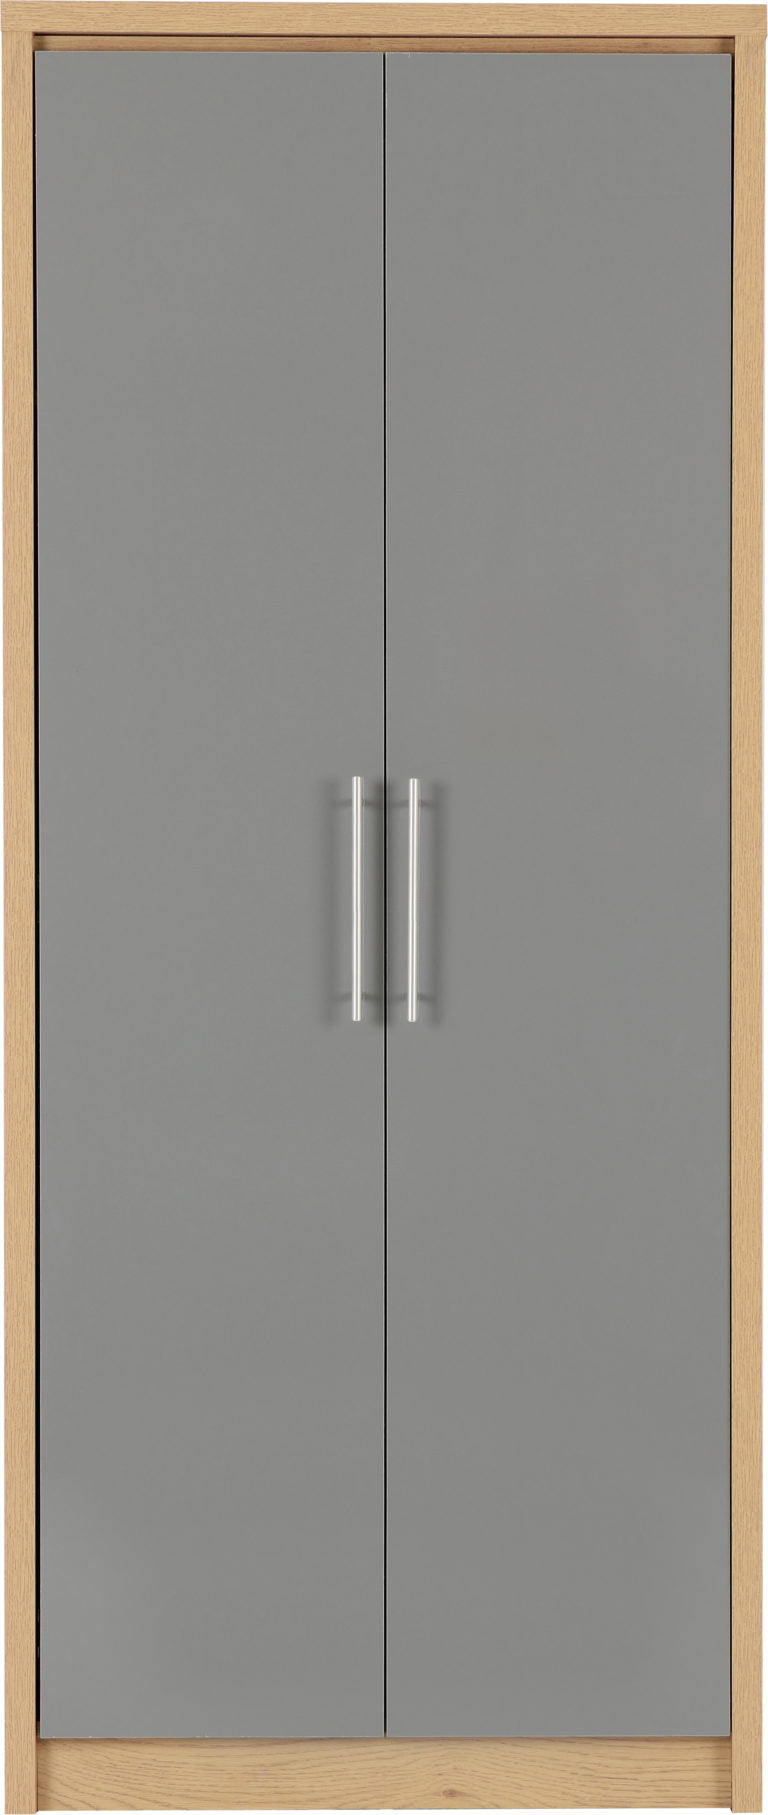 Seville 2 Door Wardrobe - Grey High Gloss/Light Oak Effect Veneer